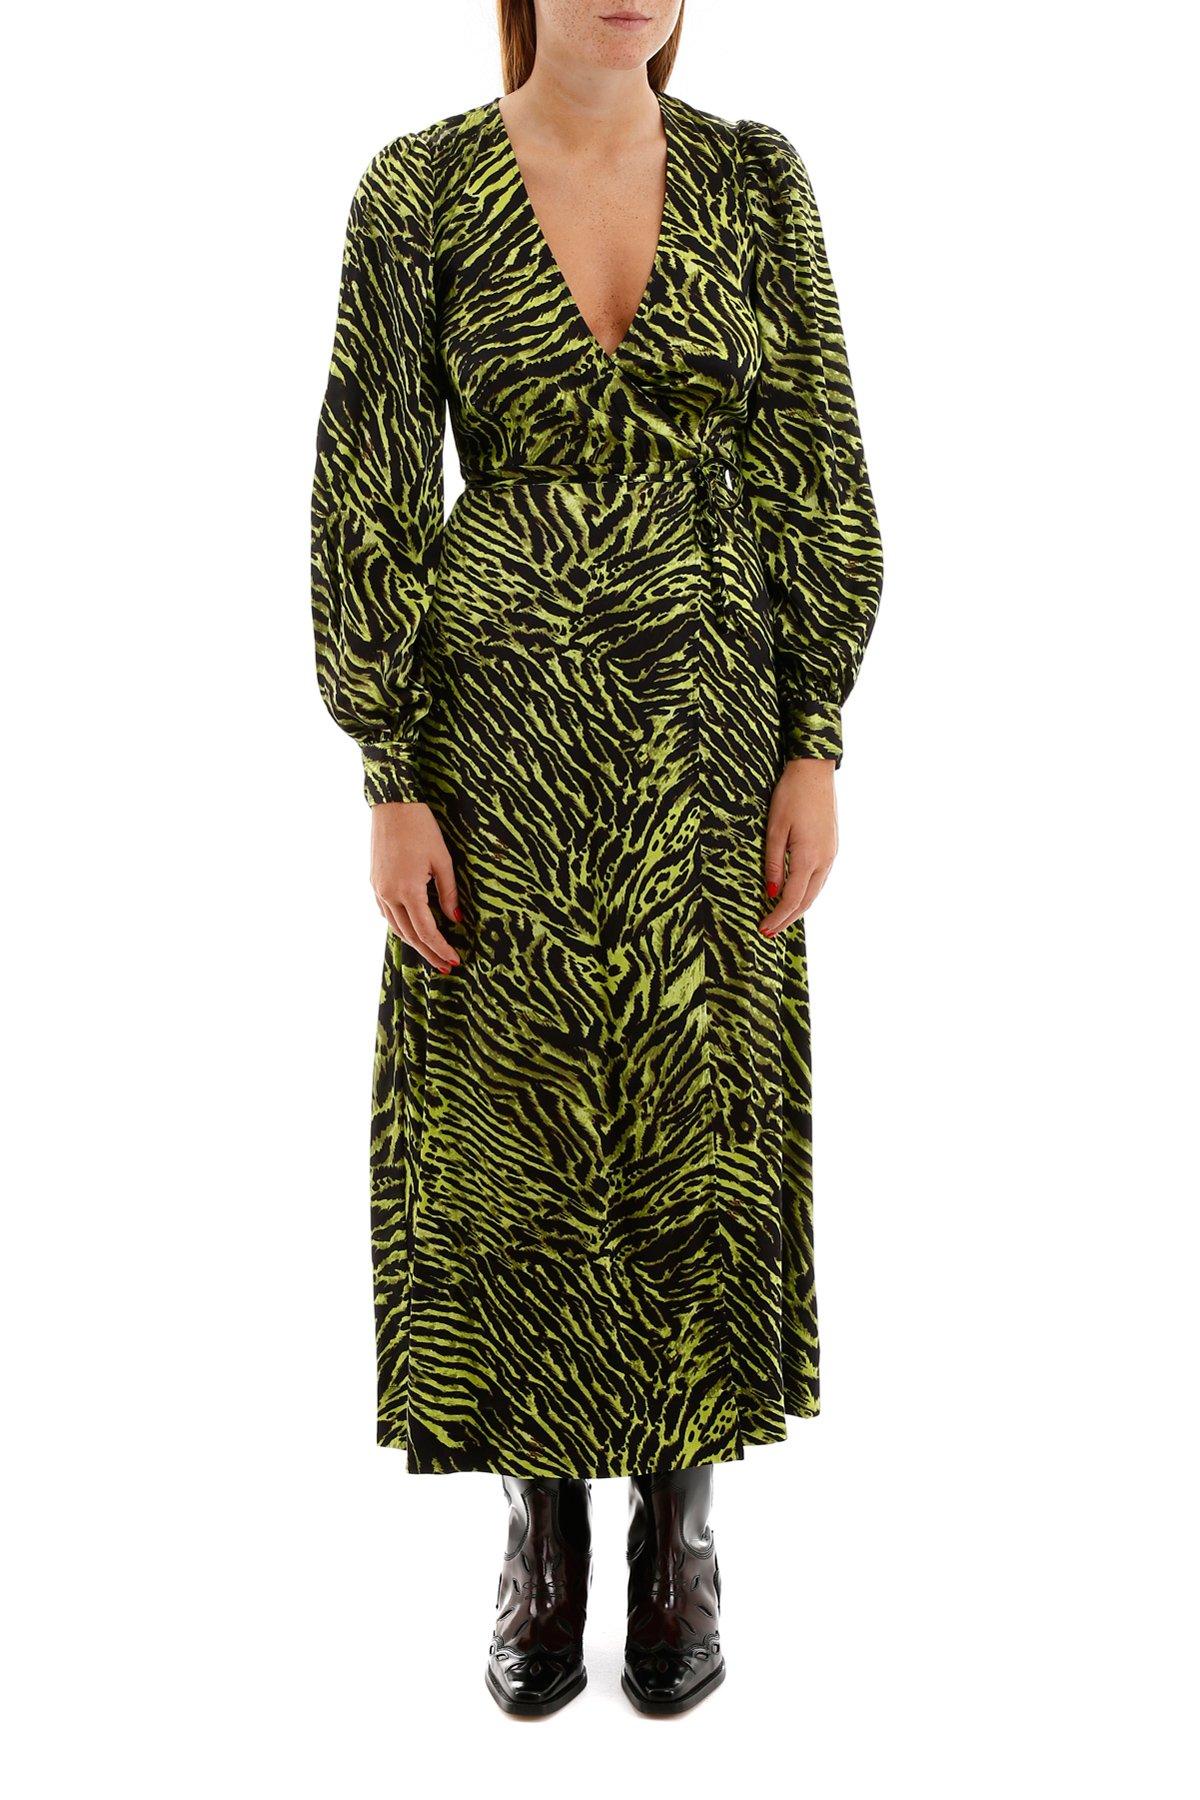 Ganni Silk Stretch Satin Dress in Green/Black/Animal Print (Green) - Save  79% - Lyst